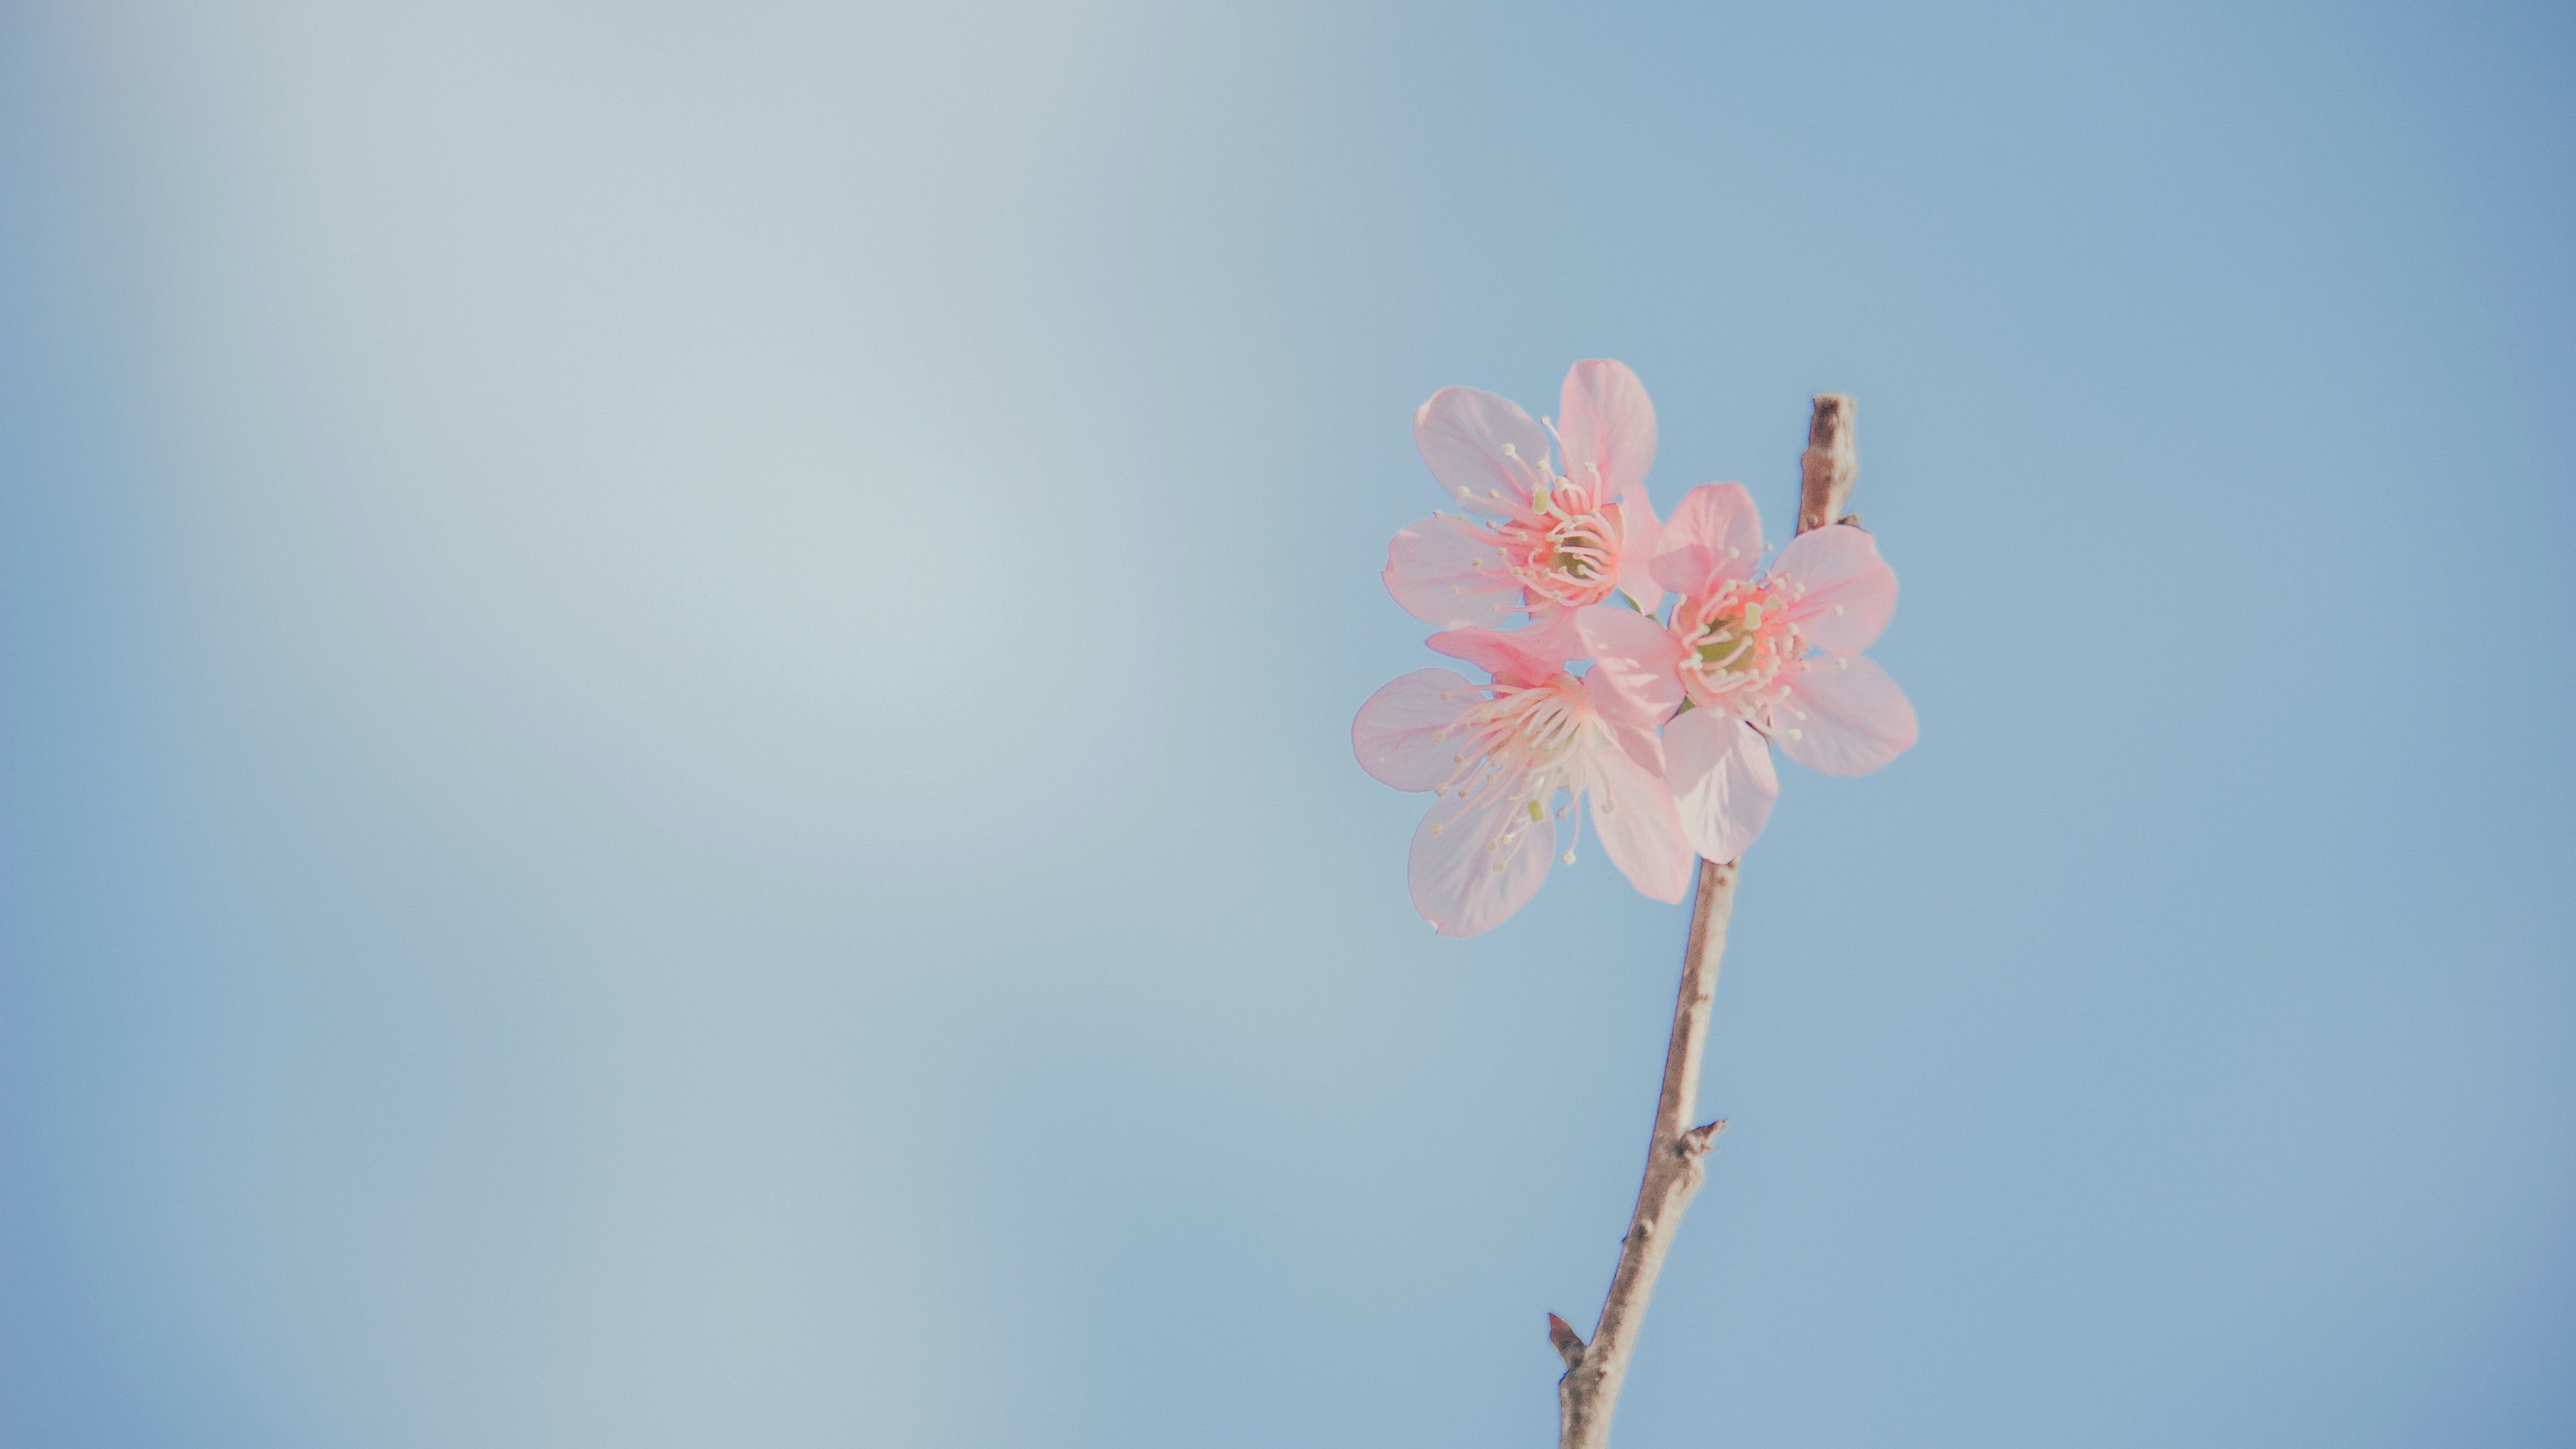 A single pink flower on a branch against a blue sky - Desktop, pastel minimalist, pastel